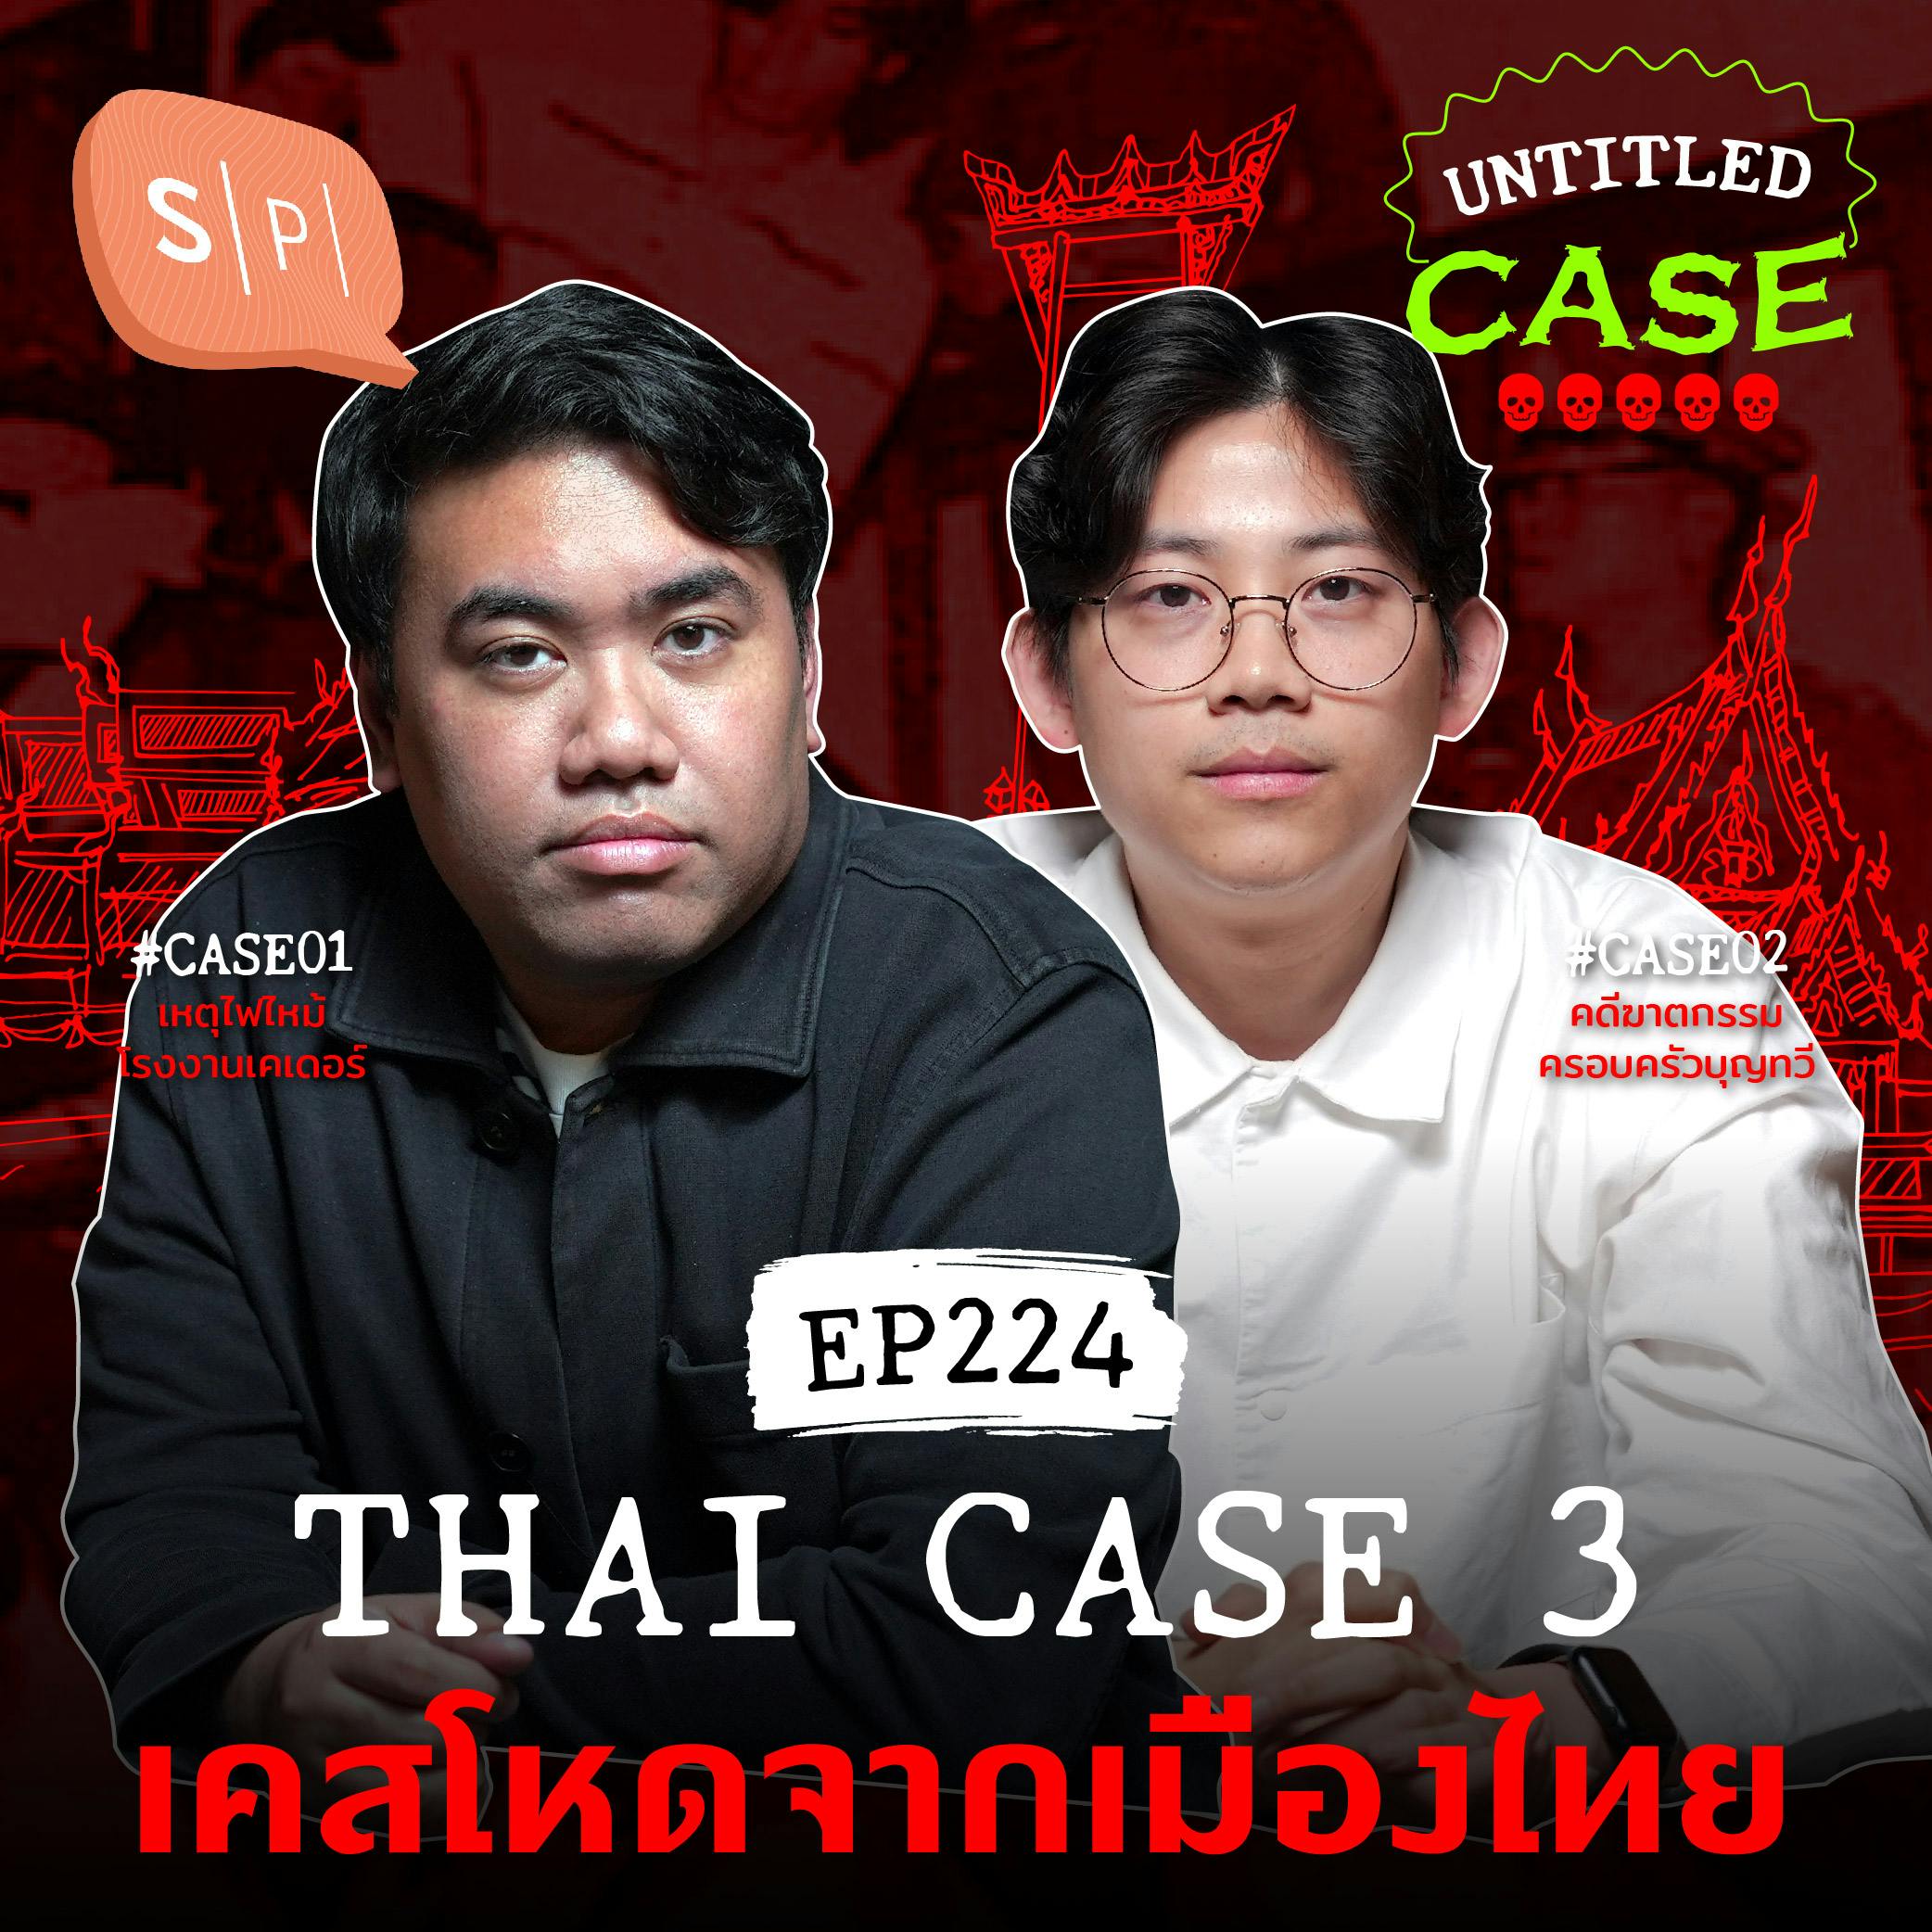 Thai Case 3 เคสโหดจากเมืองไทย | Untitled Case EP224